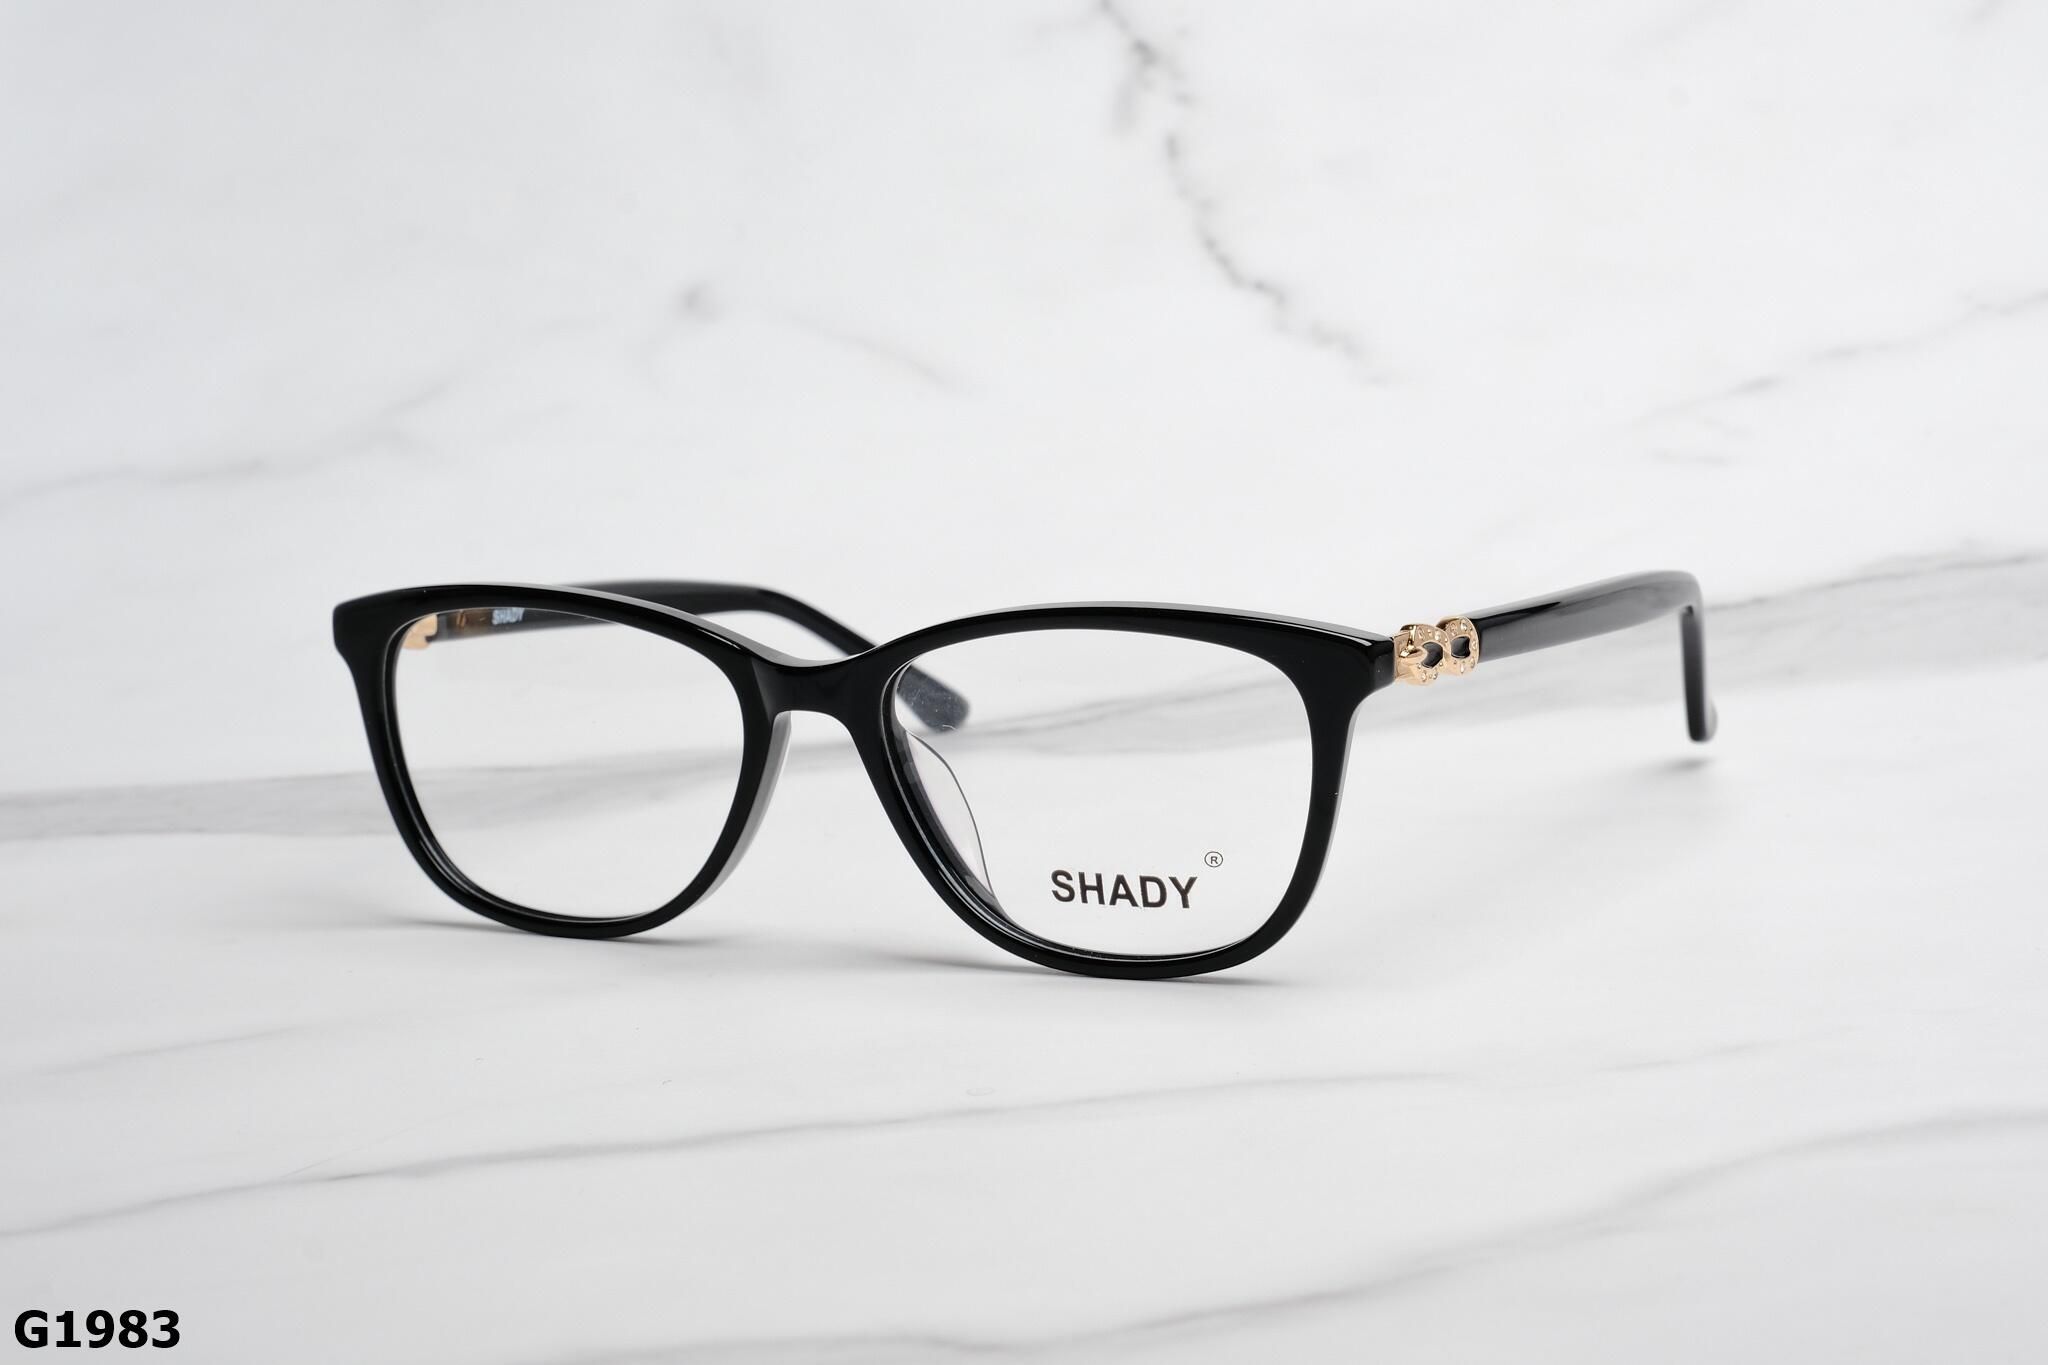  SHADY Eyewear - Glasses - G1983 